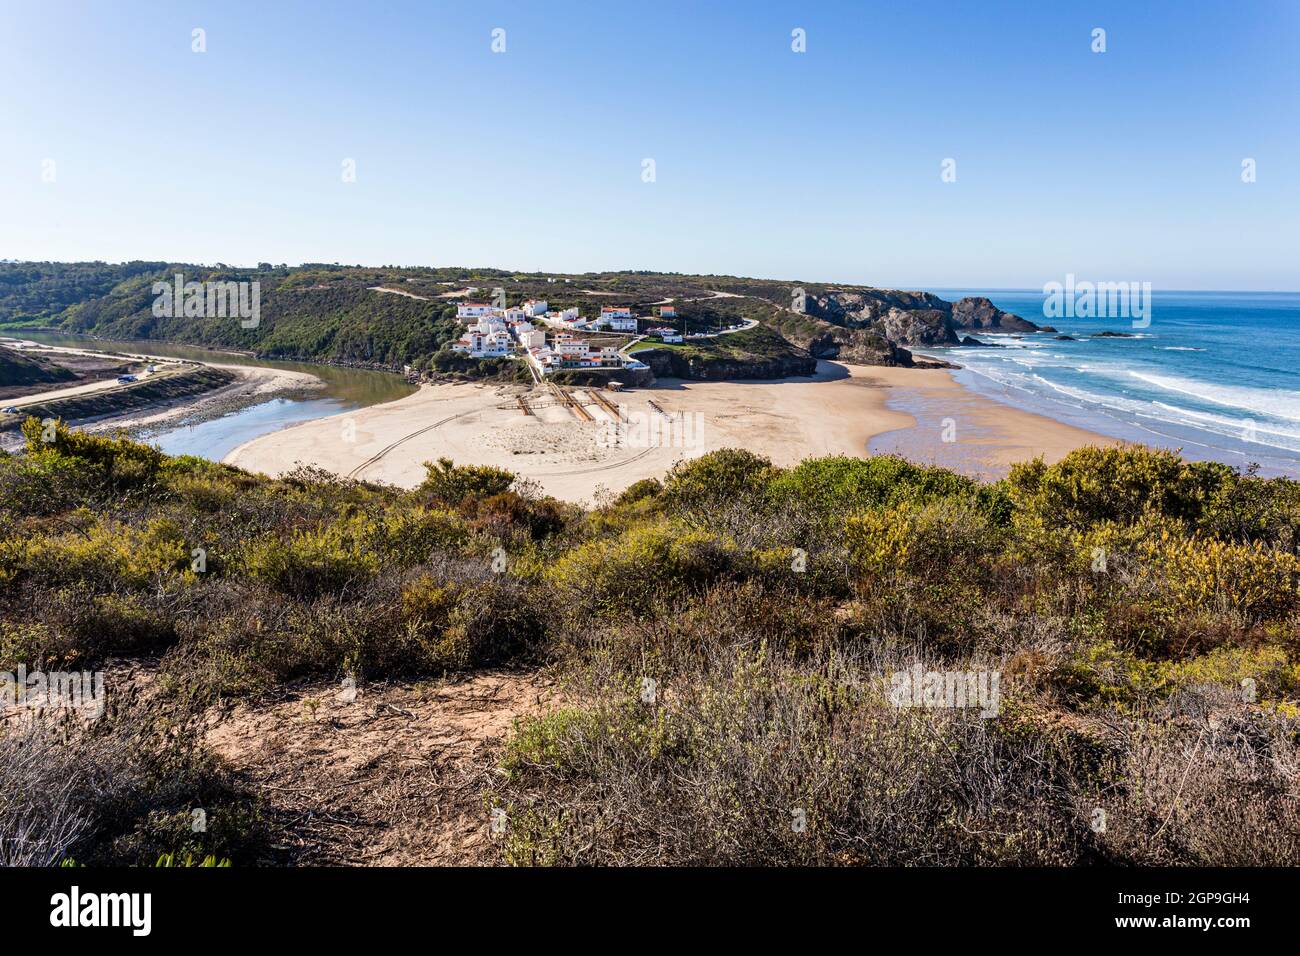 Odeceixe mit Strand, Ribeira de Seixe und Atlantischer Ozean, Algarve, Portugal, Odeceixe with beach, Ribeira des Seixe and Atlantic, Algarve, Portuga Stock Photo